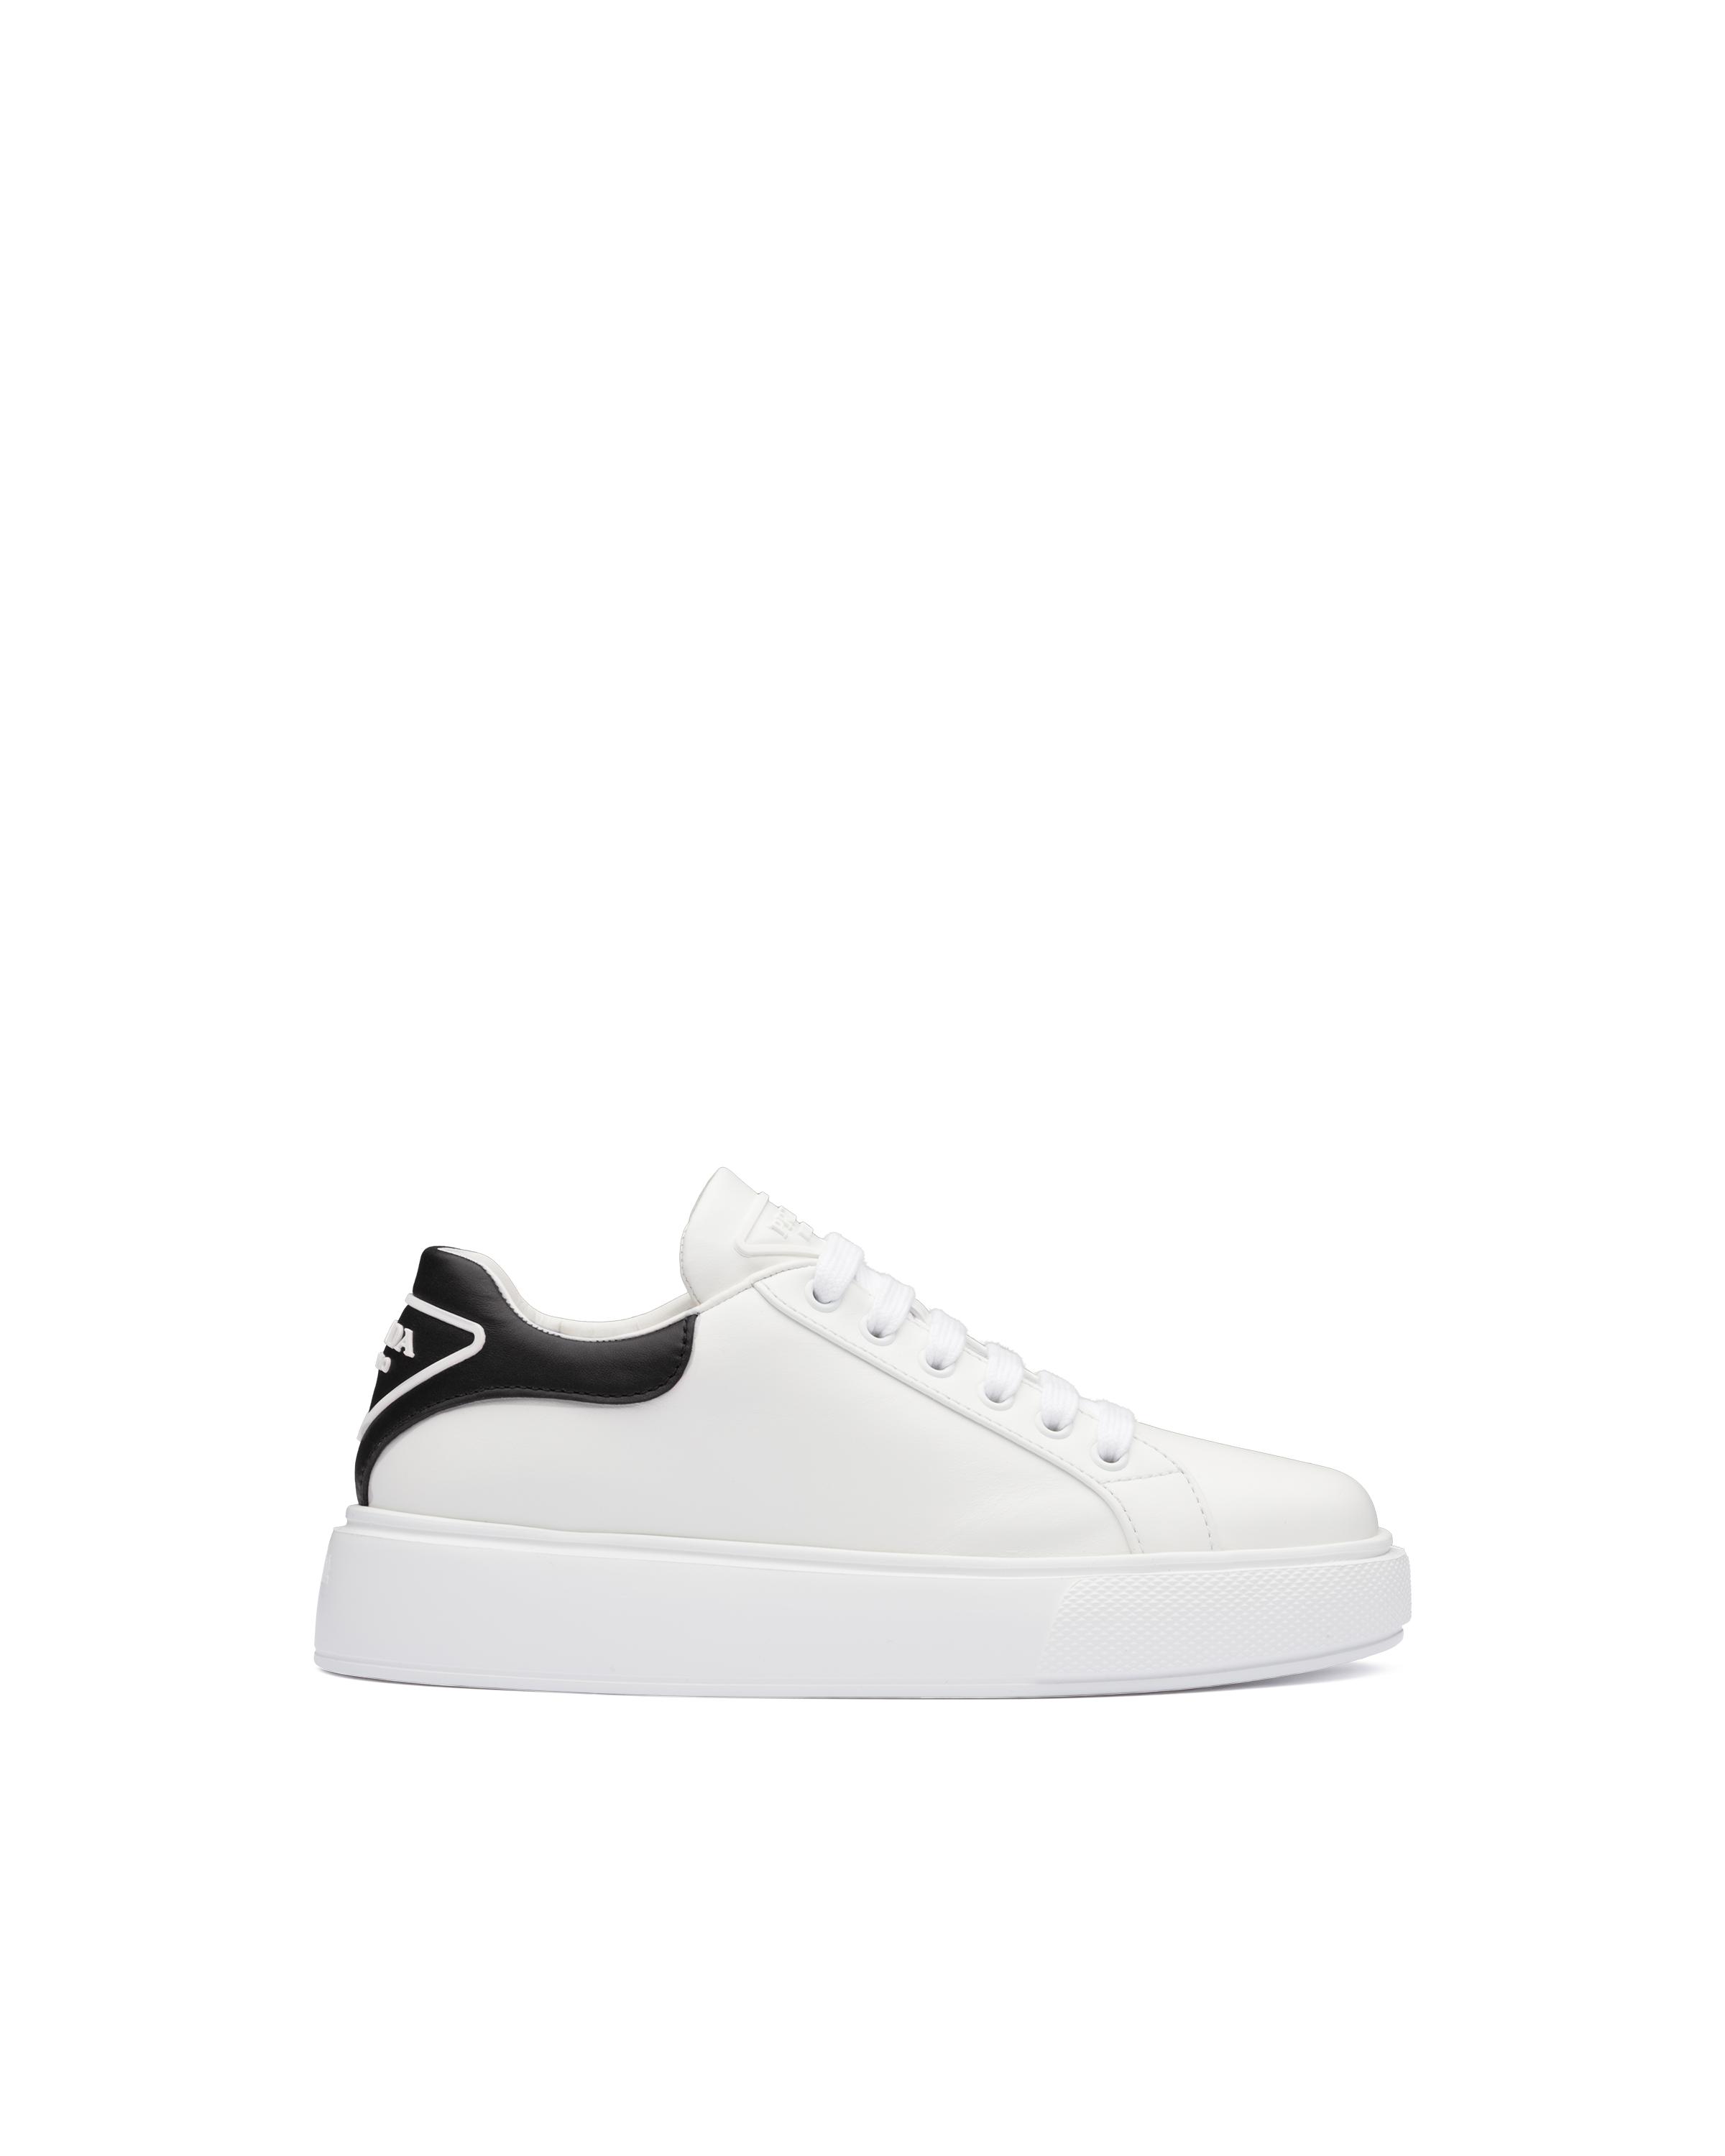 Prada Leather Sneakers in White/Black (White) - Lyst